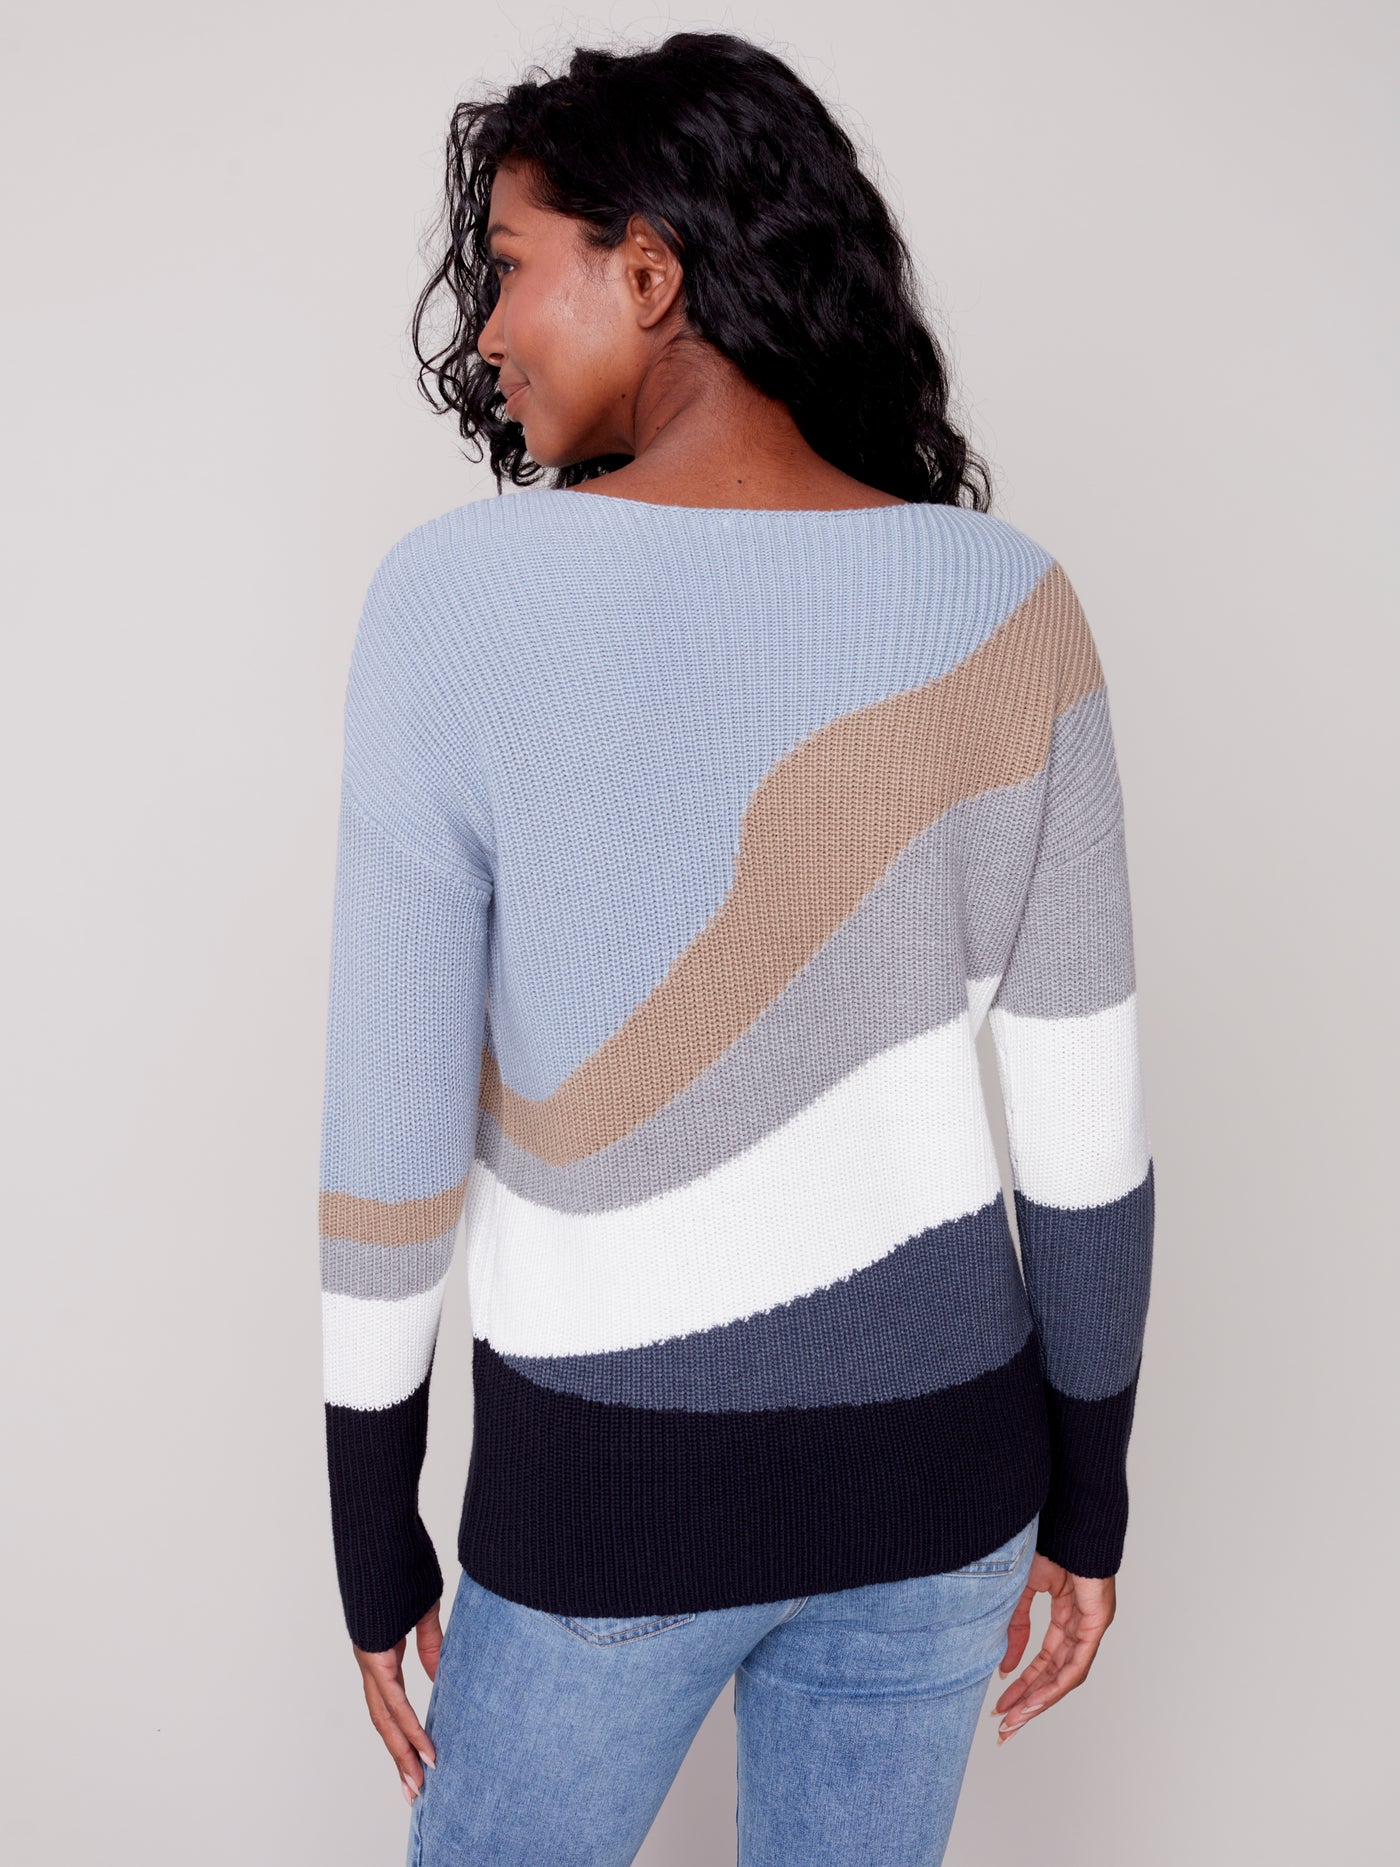 Charlie B Top - Colour Block Sweater - Blue /Multi